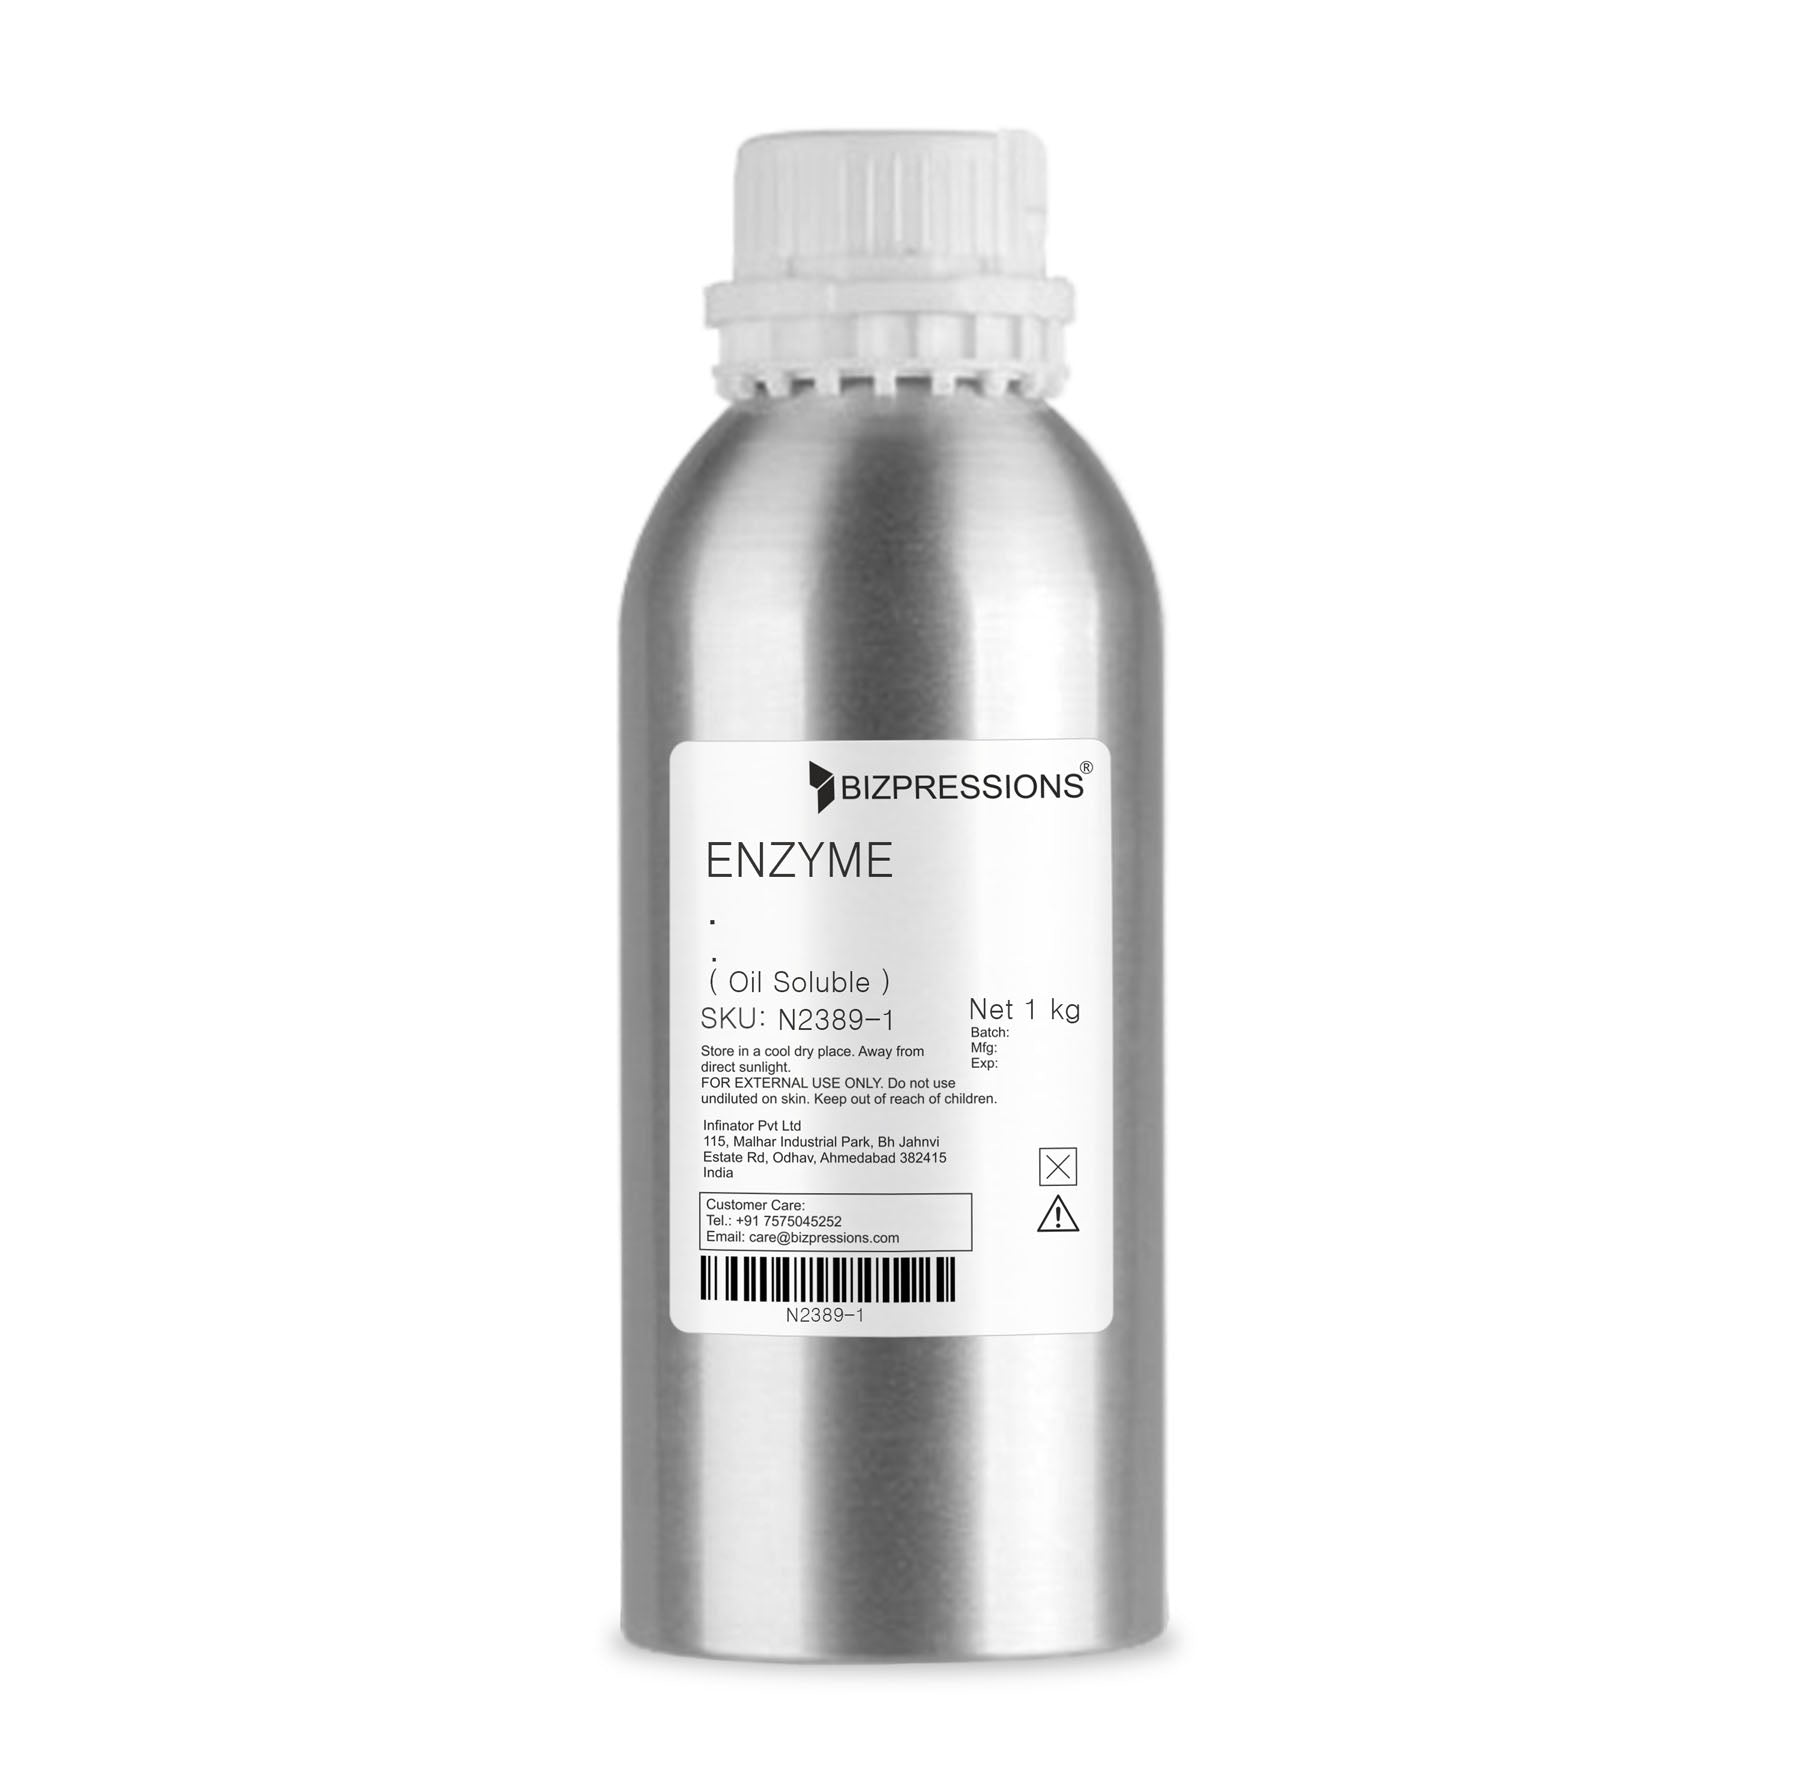 ENZYME - Fragrance ( Oil Soluble ) - 1 kg